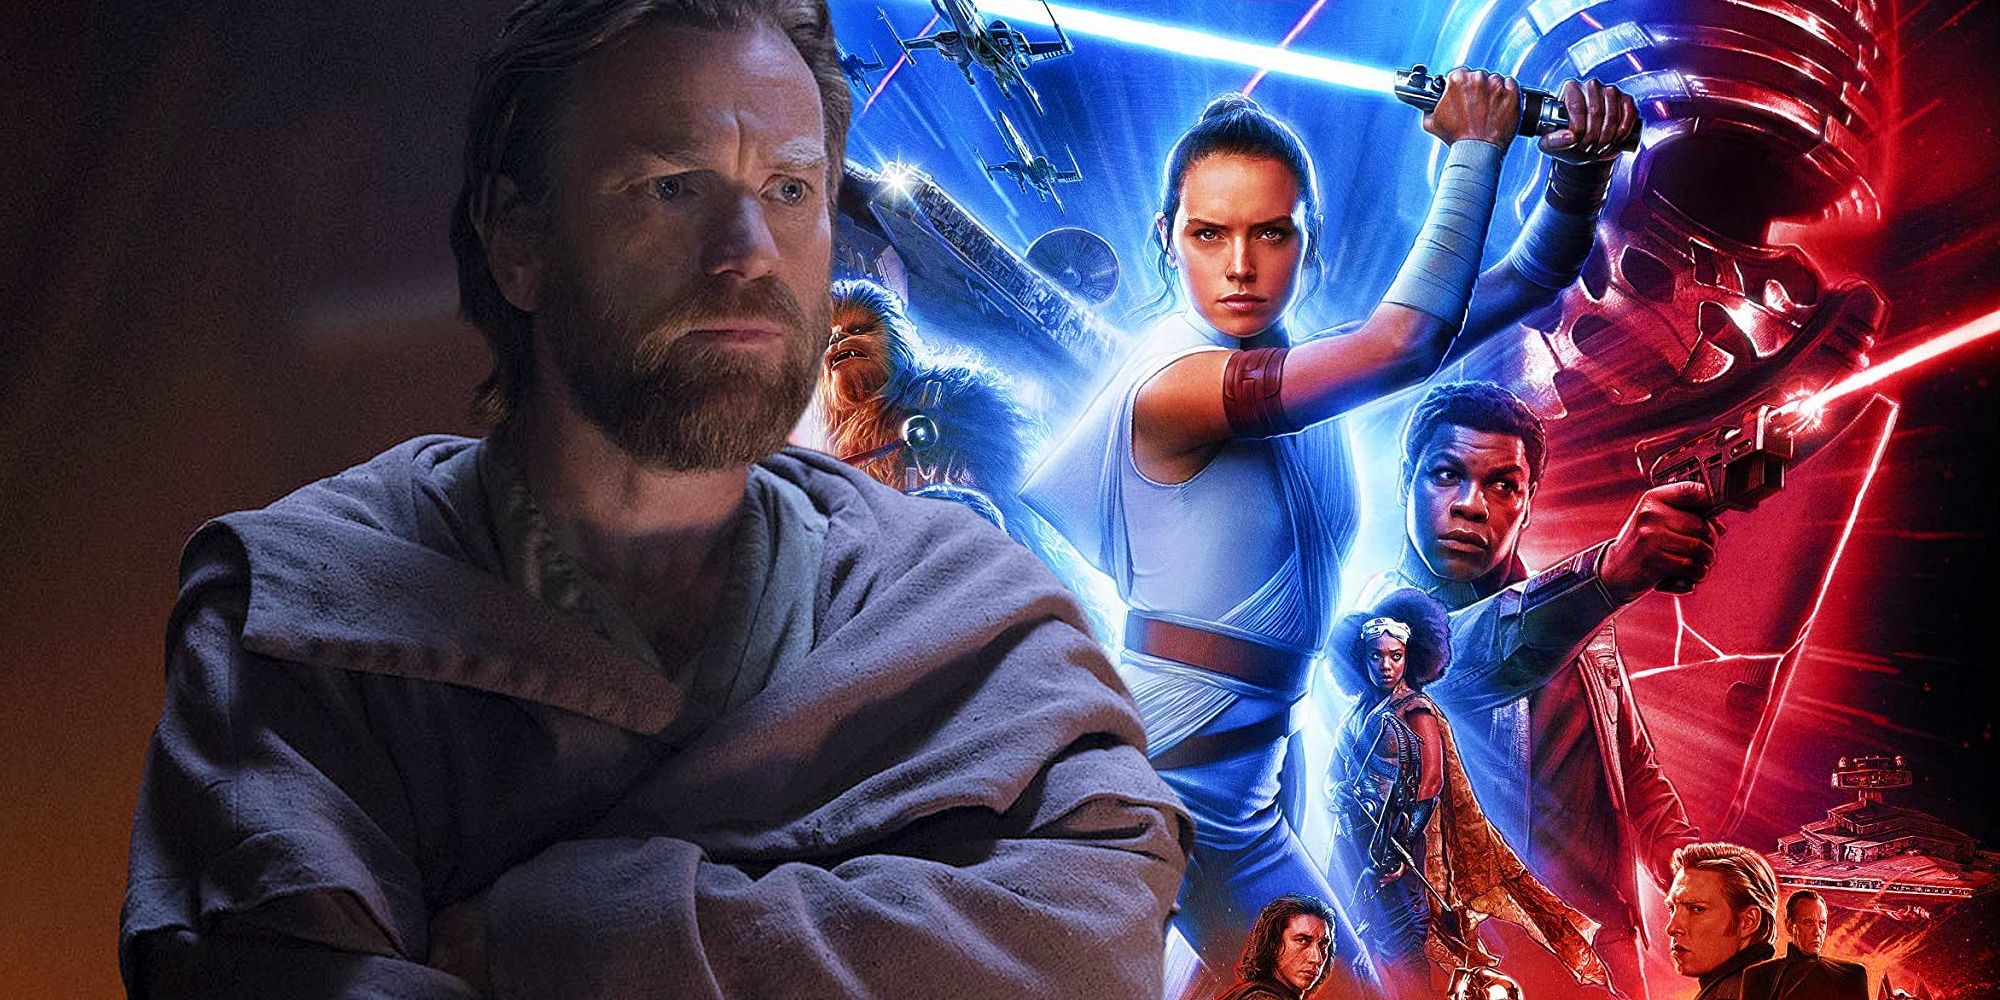 The poster for Star Wars: The Rise of Skywalker next to Ewan McGregor crossing his arms as Obi-Wan Kenobi